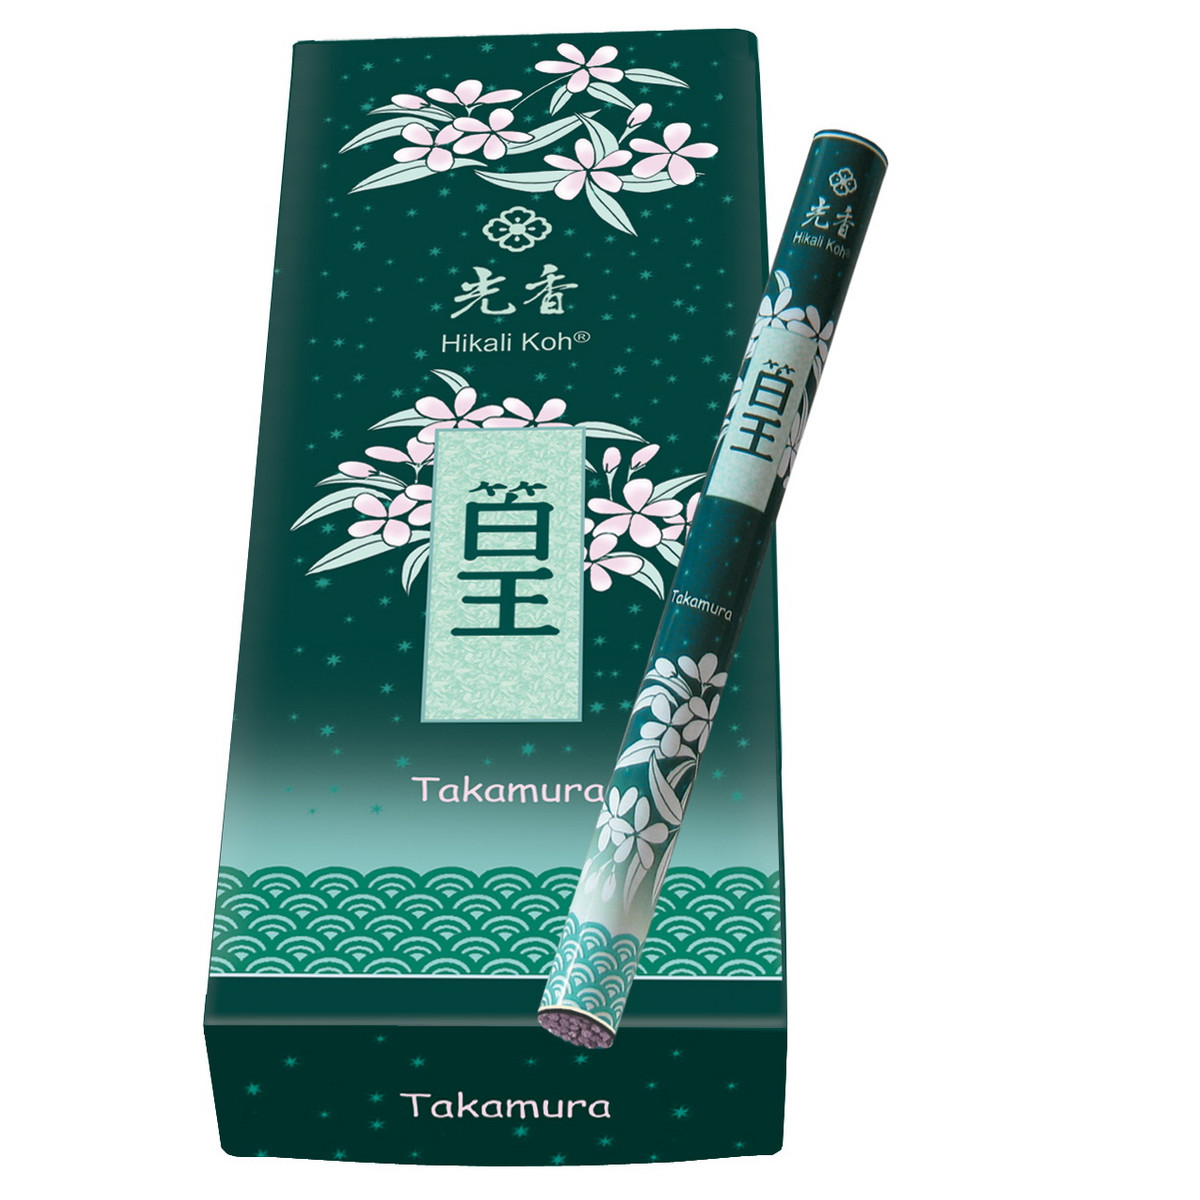 TAKAMURA - Bambus Hain, Hikali Koh Classic...